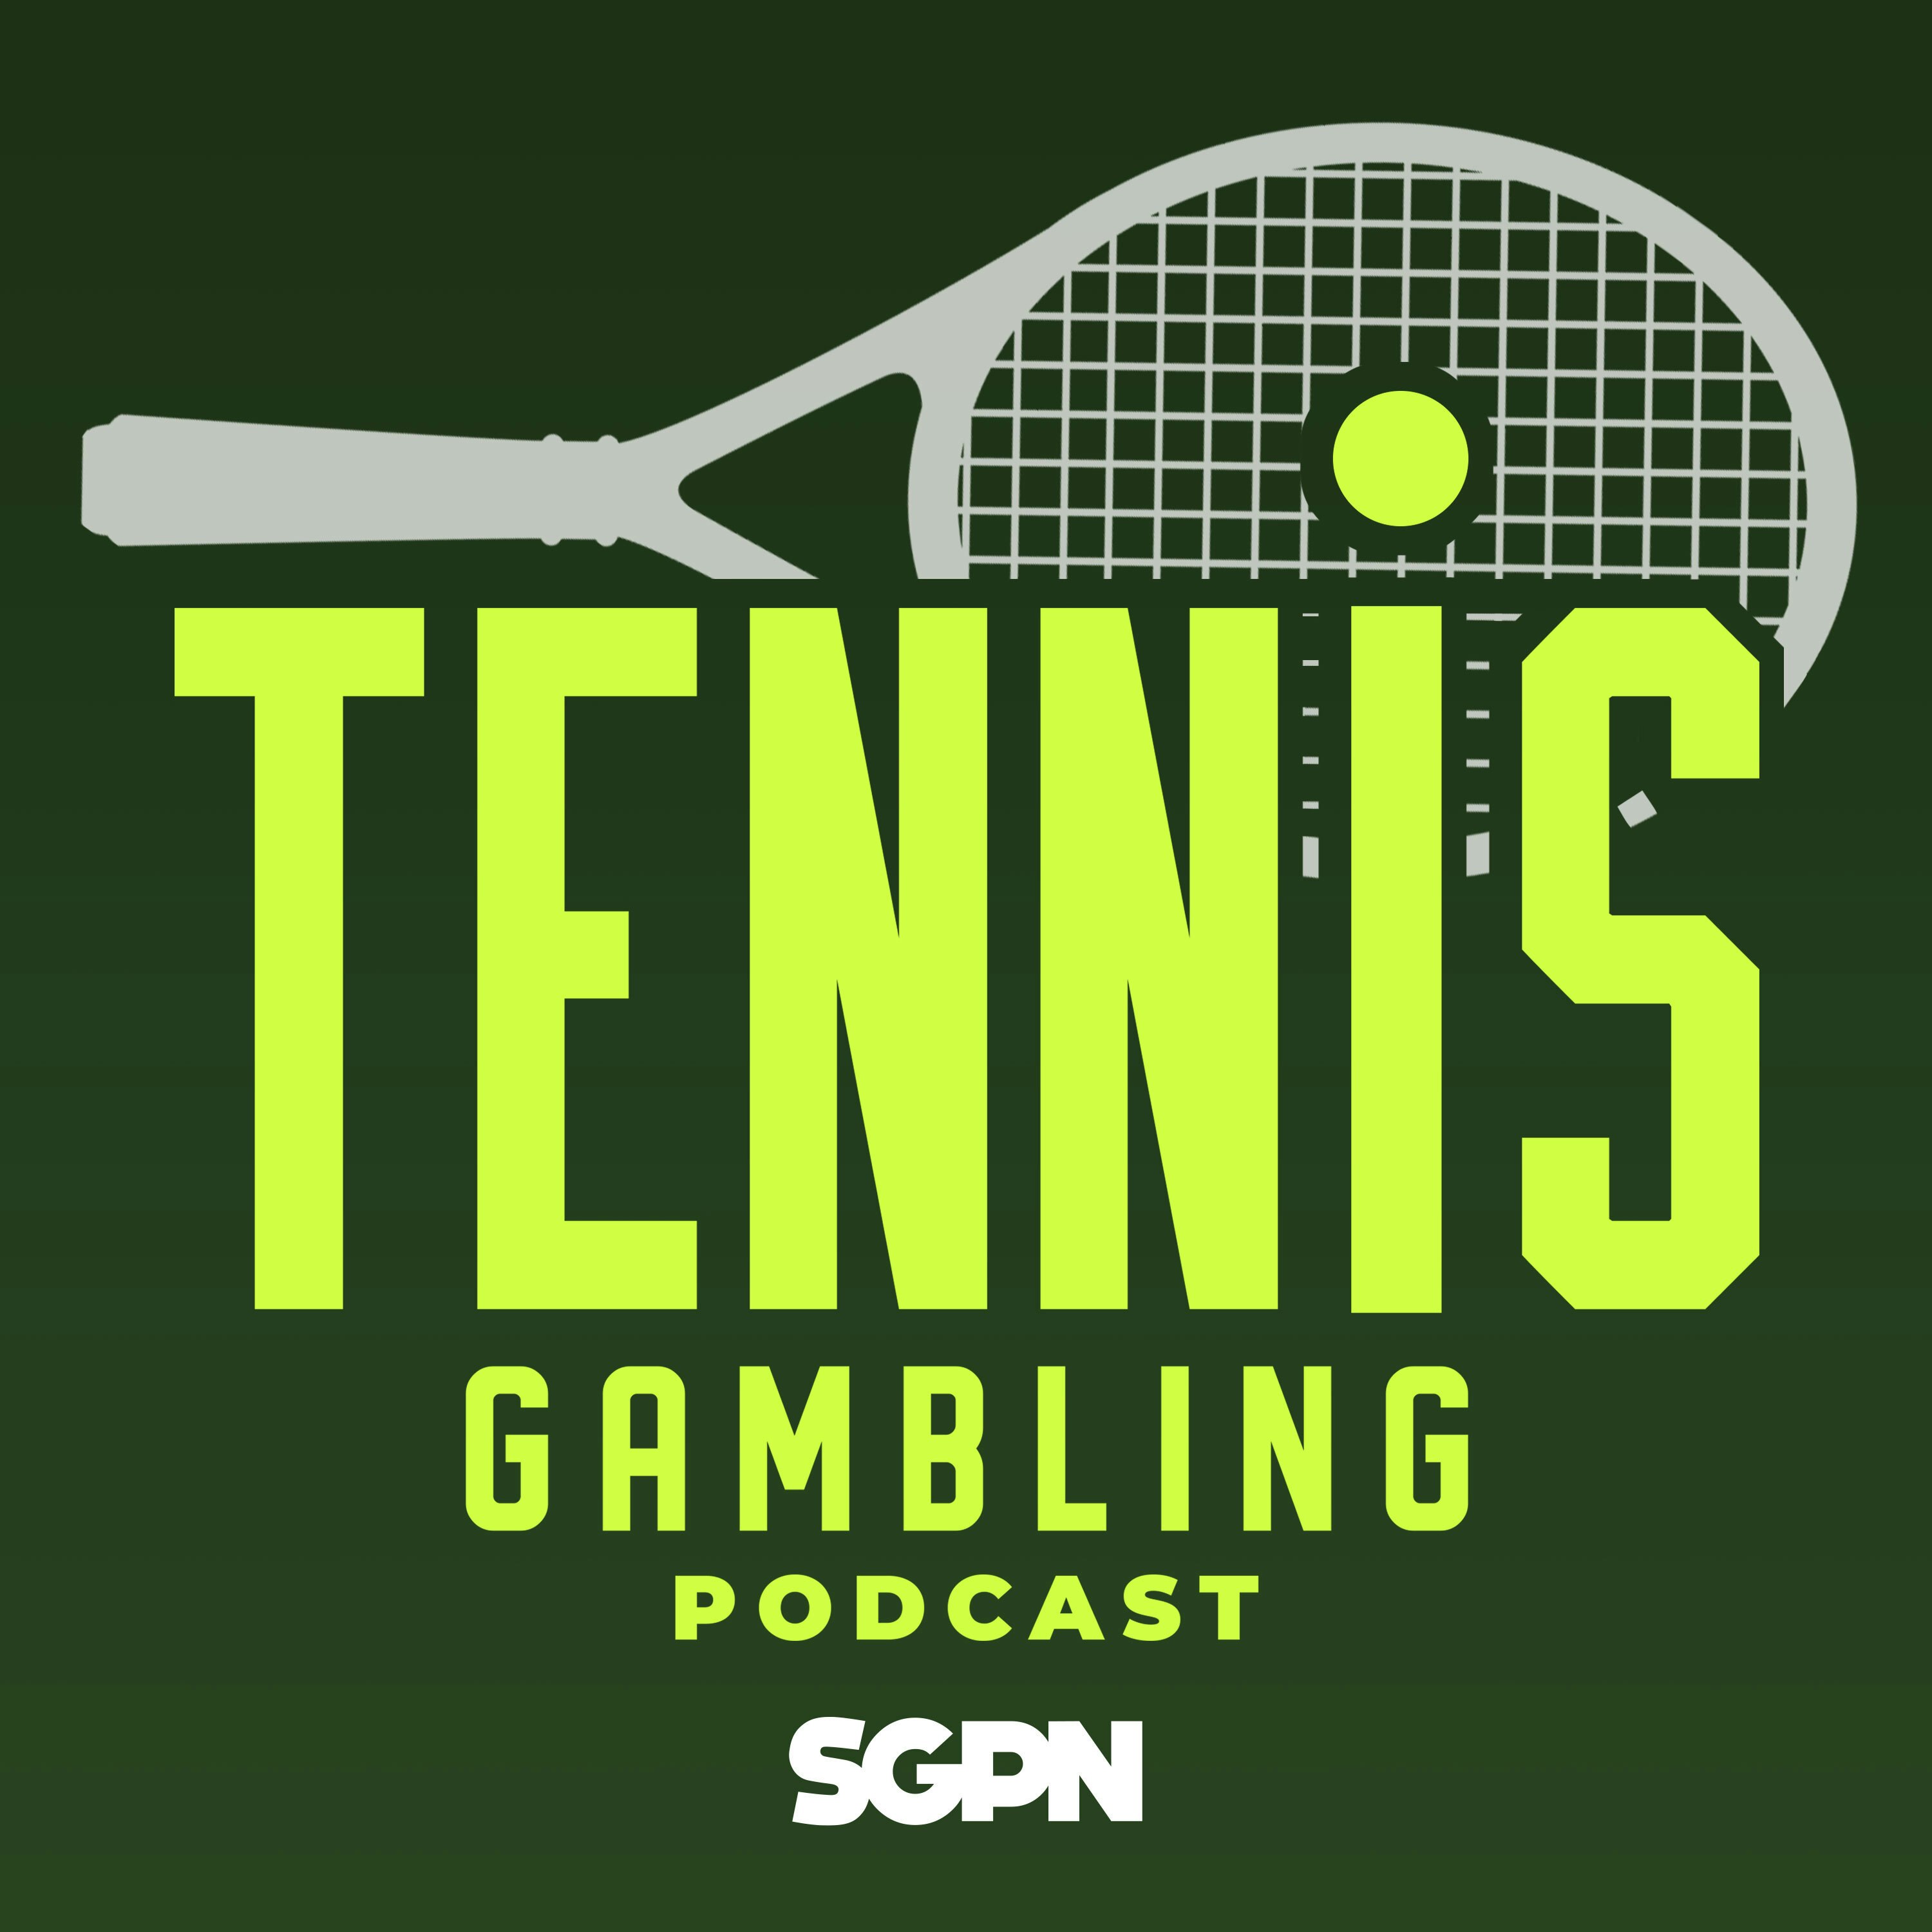 Tennis Gambling Podcast